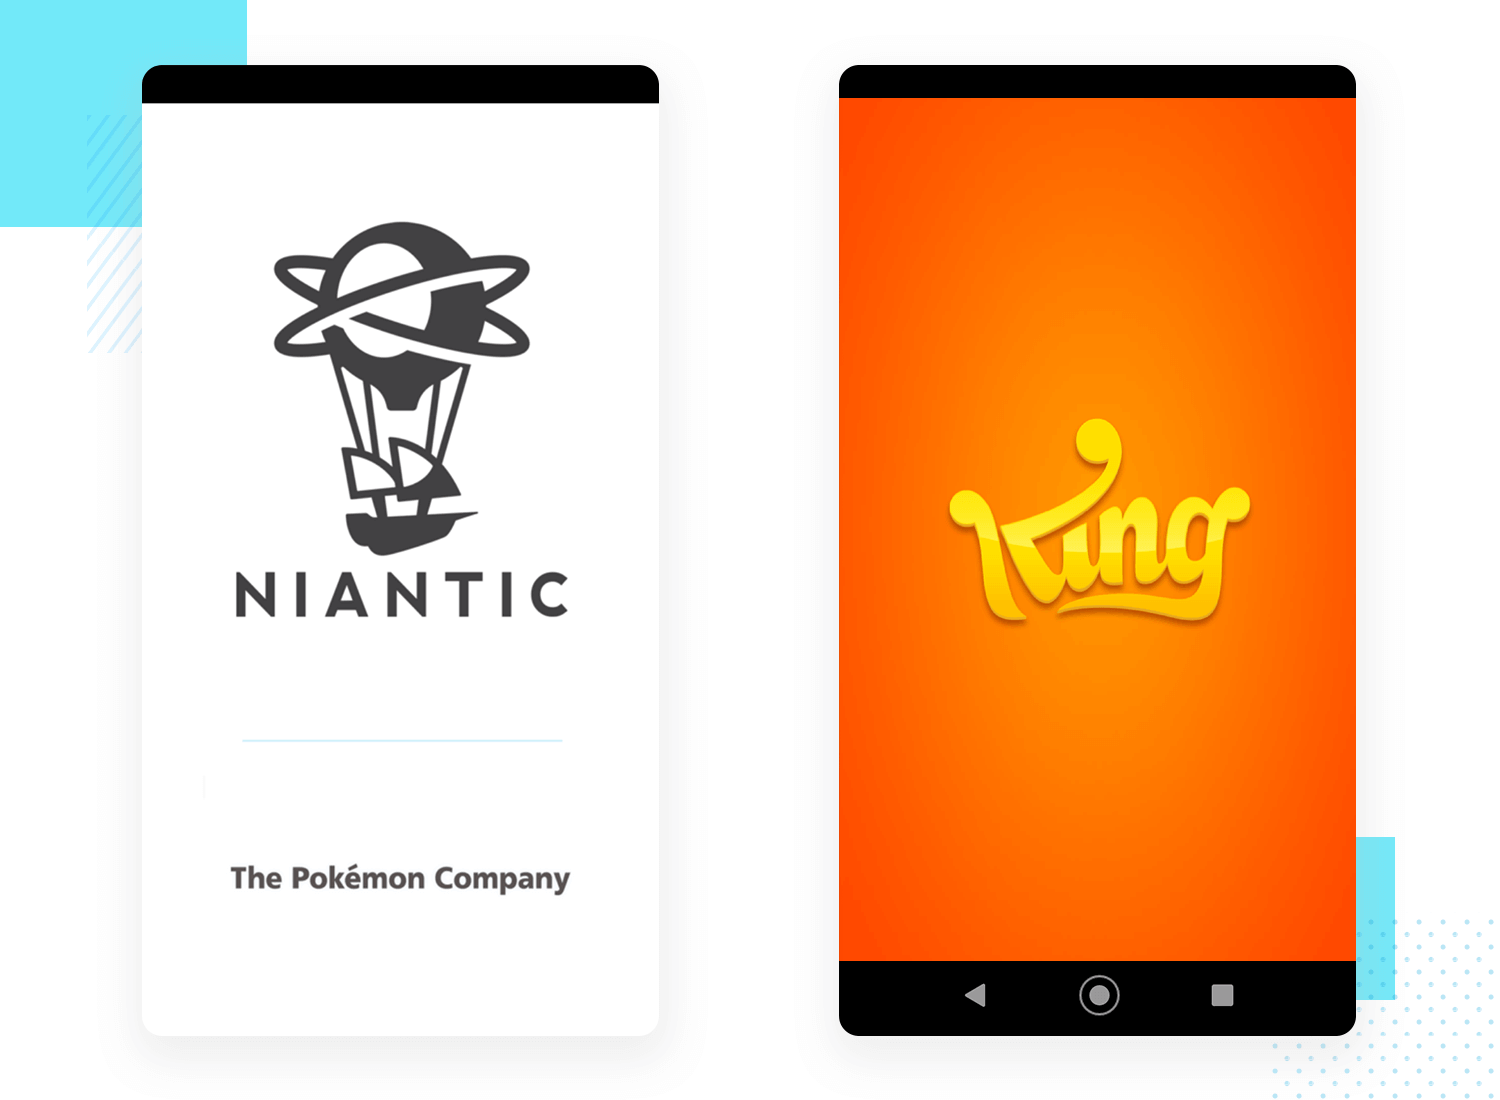 King and Niantic - 20 inspiring splash screens